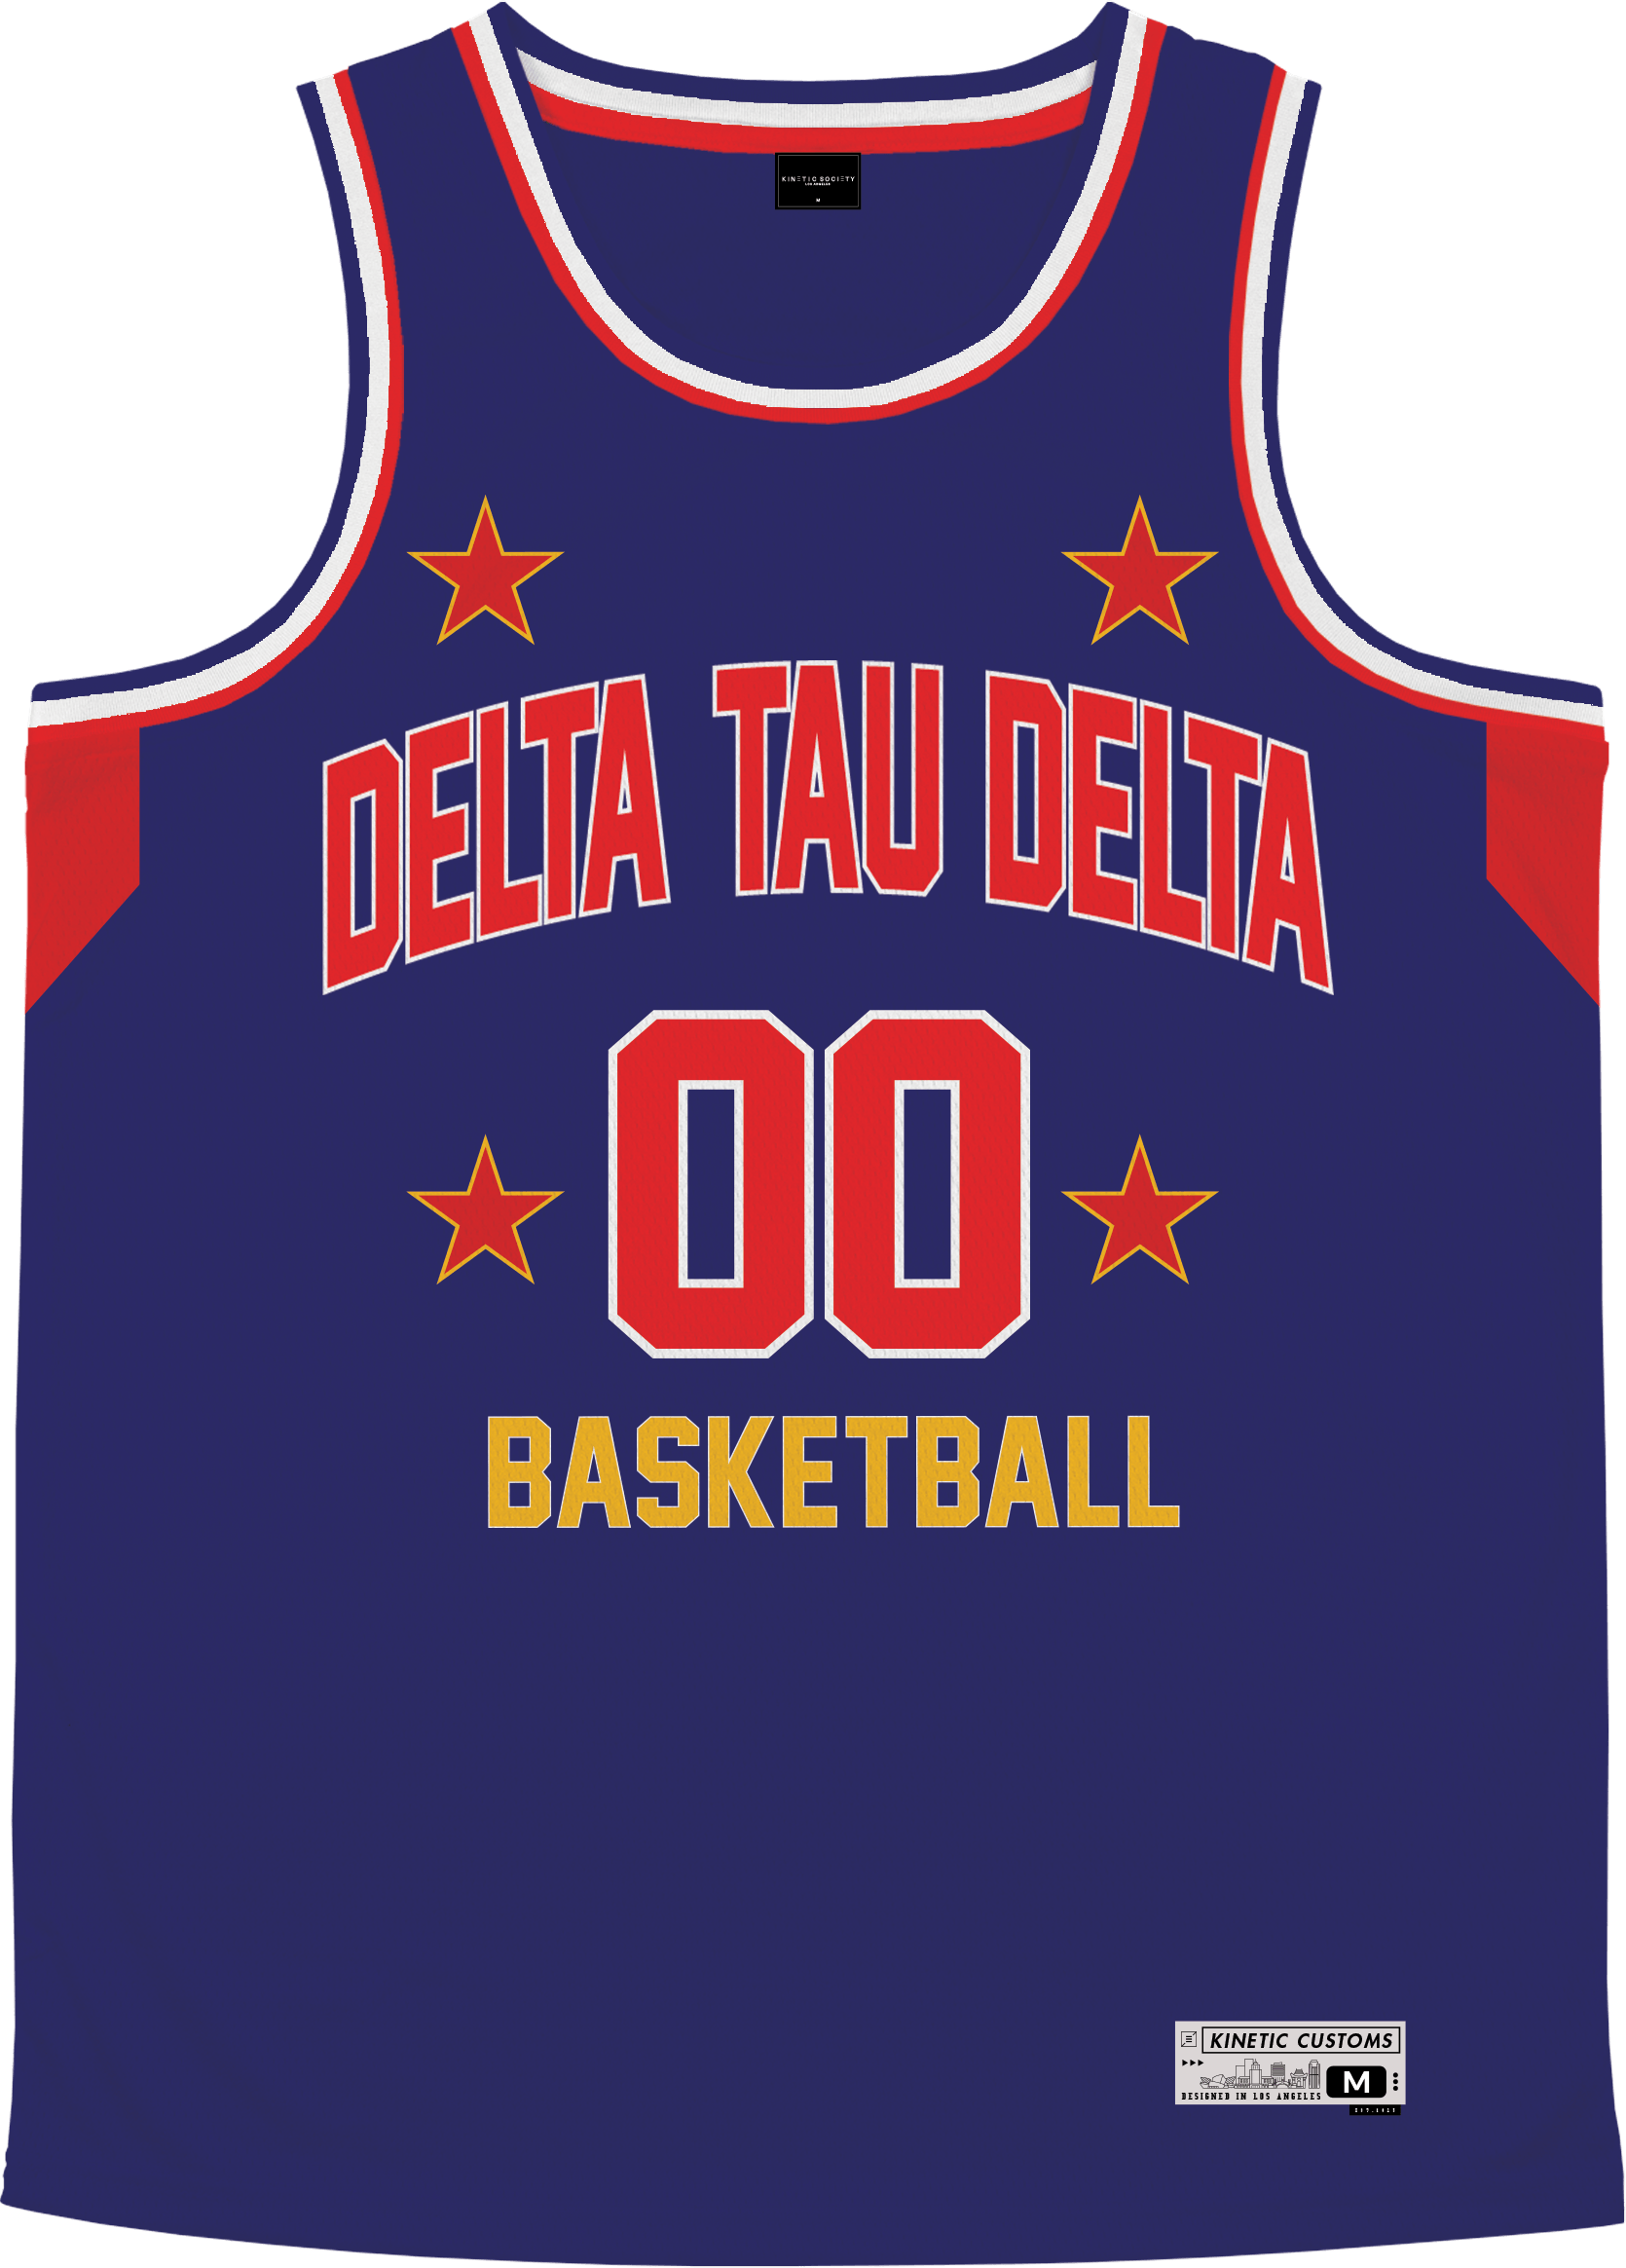 Delta Tau Delta - Retro Ballers Basketball Jersey Premium Basketball Kinetic Society LLC 